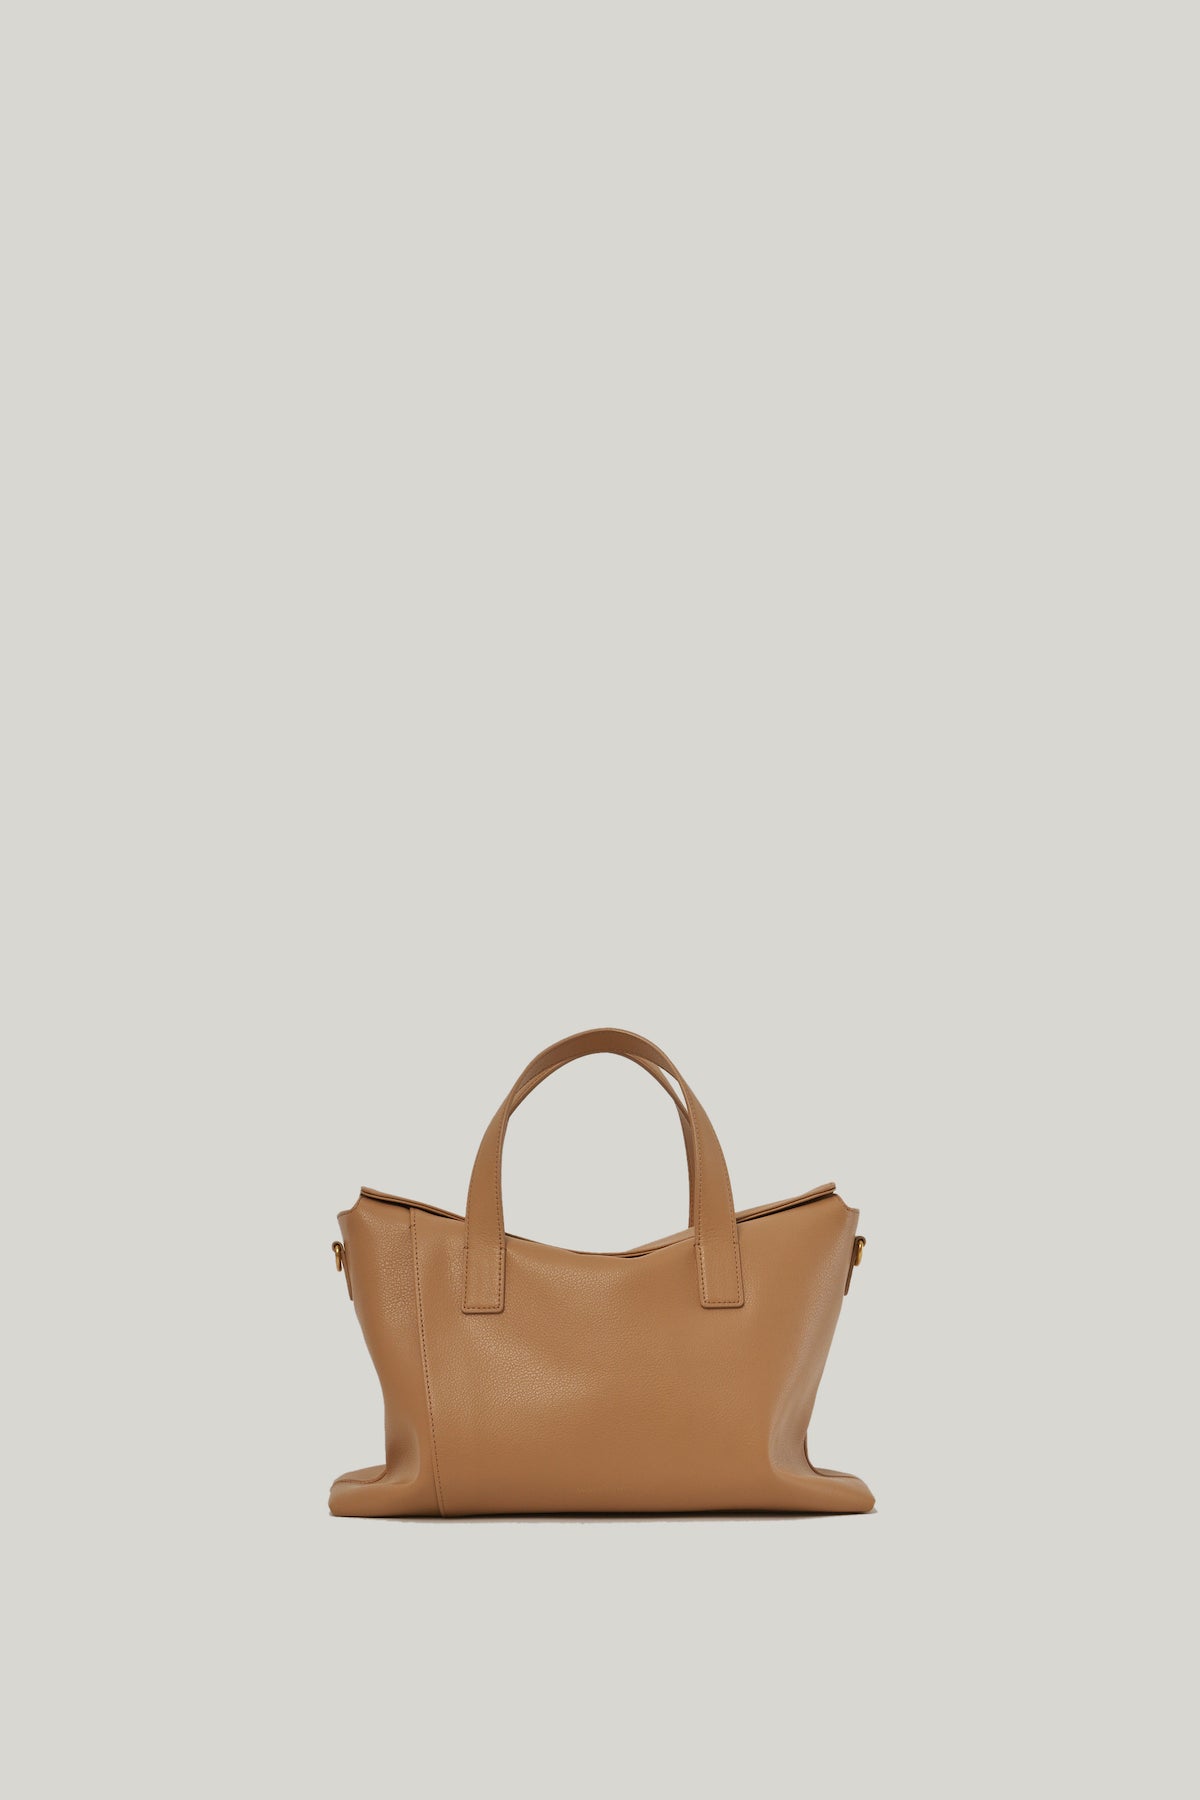 Valentine Bag In Sand Brown